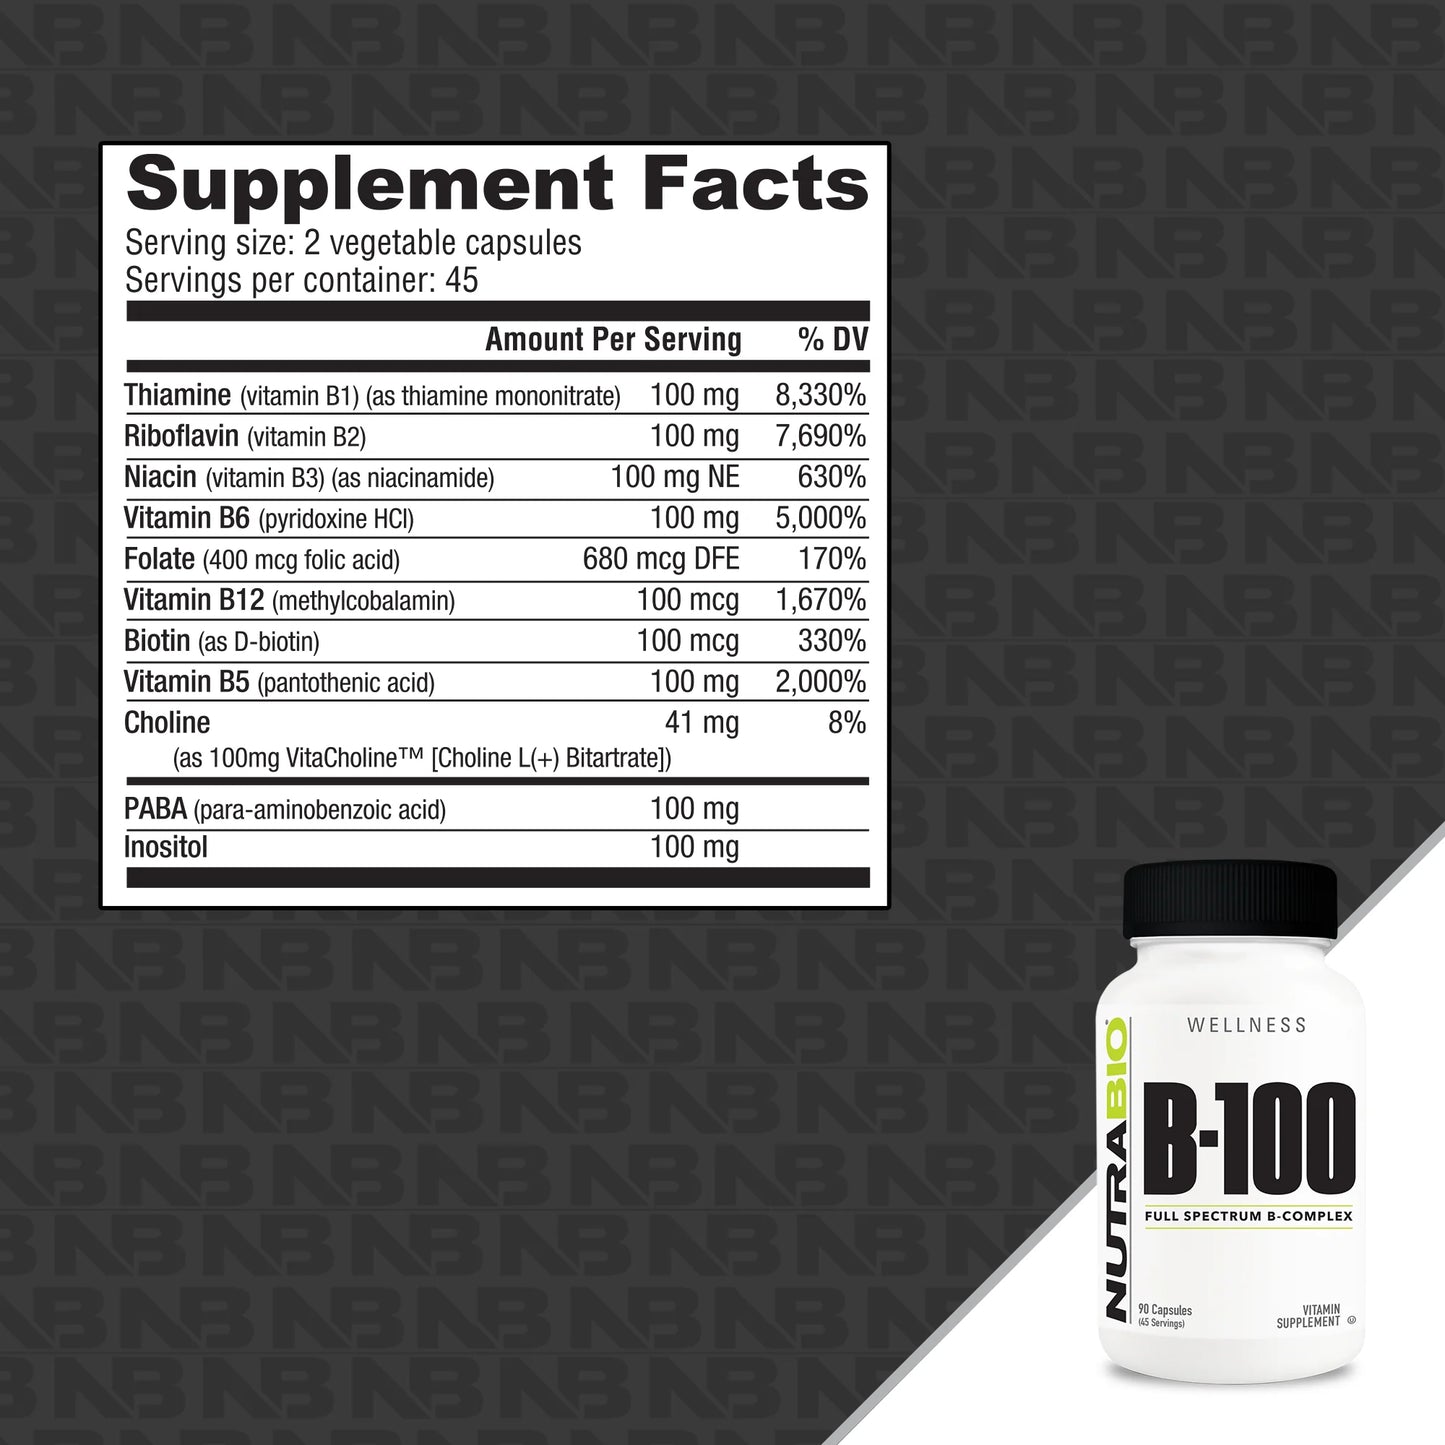 Vitamin B-100 Complex by Nutrabio